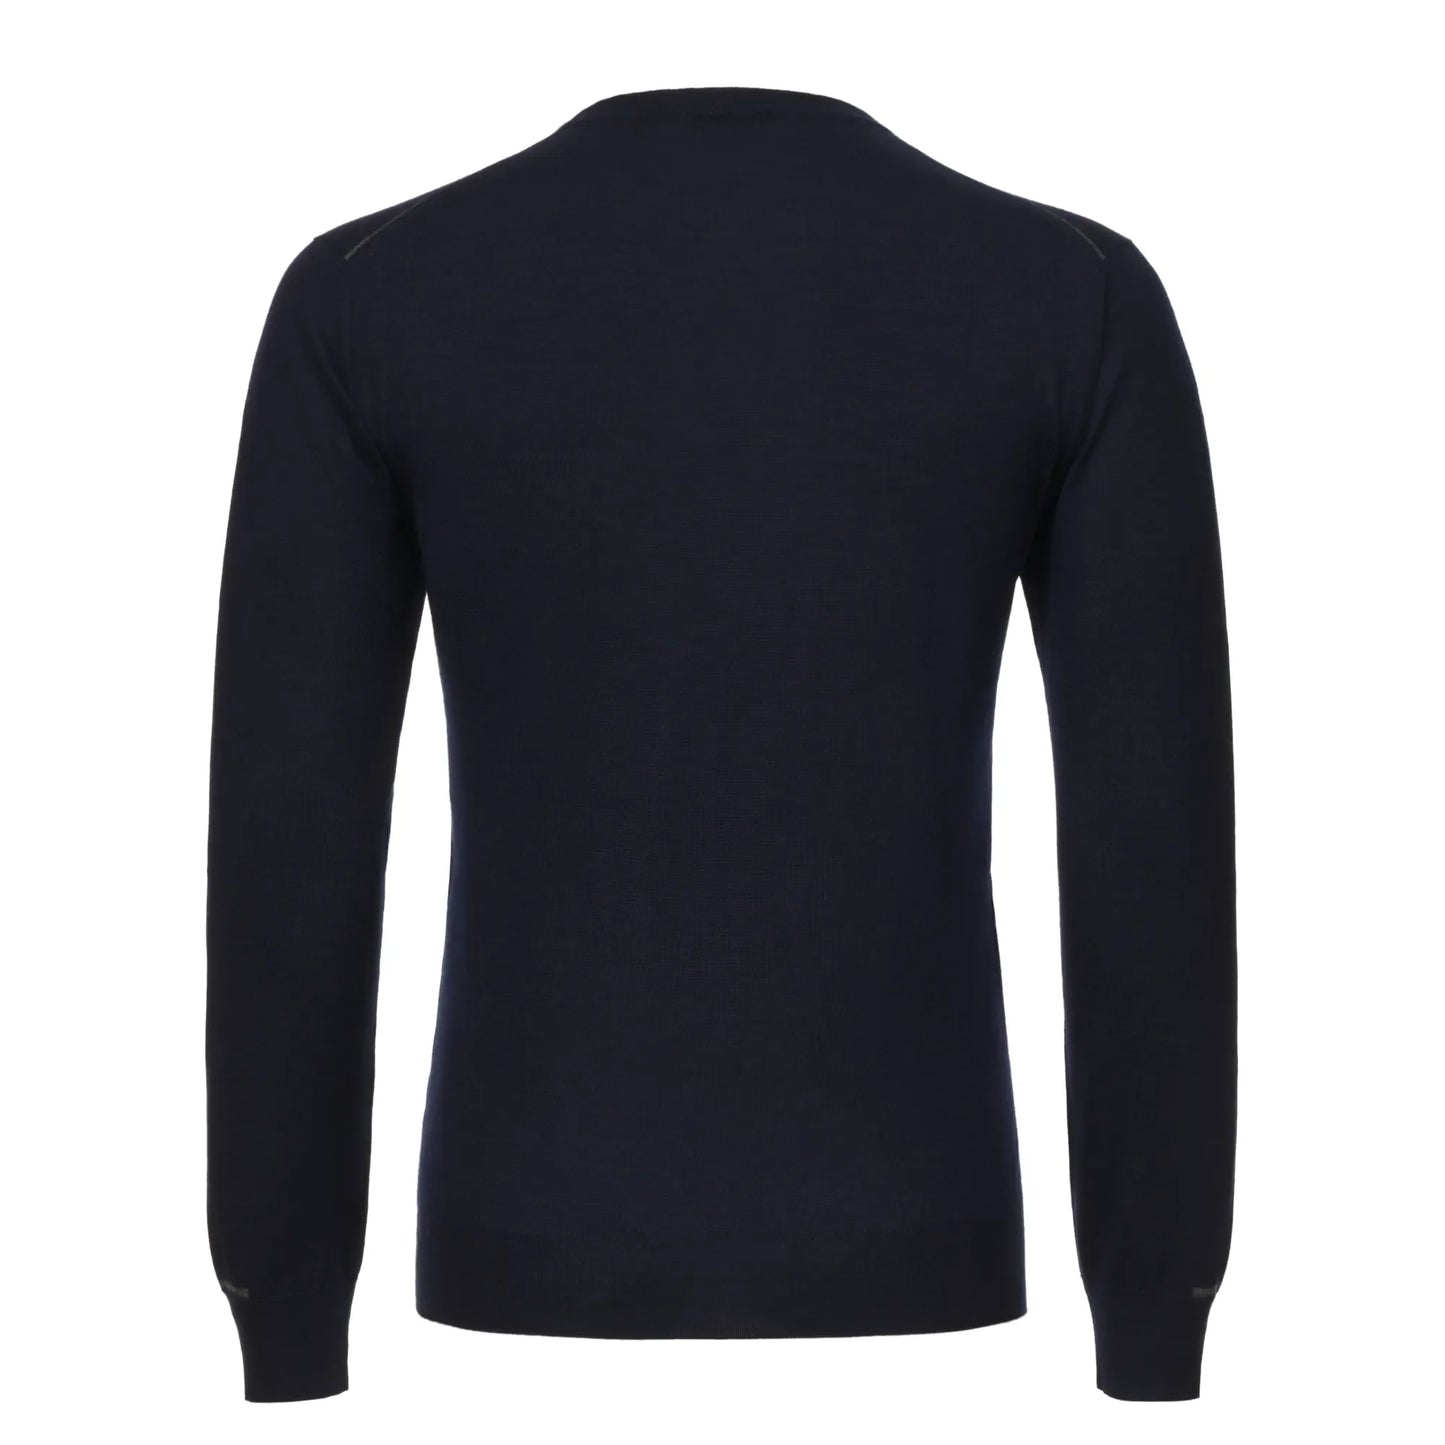 Cashmere Blend Sweater in Dark Blue with Grey Details